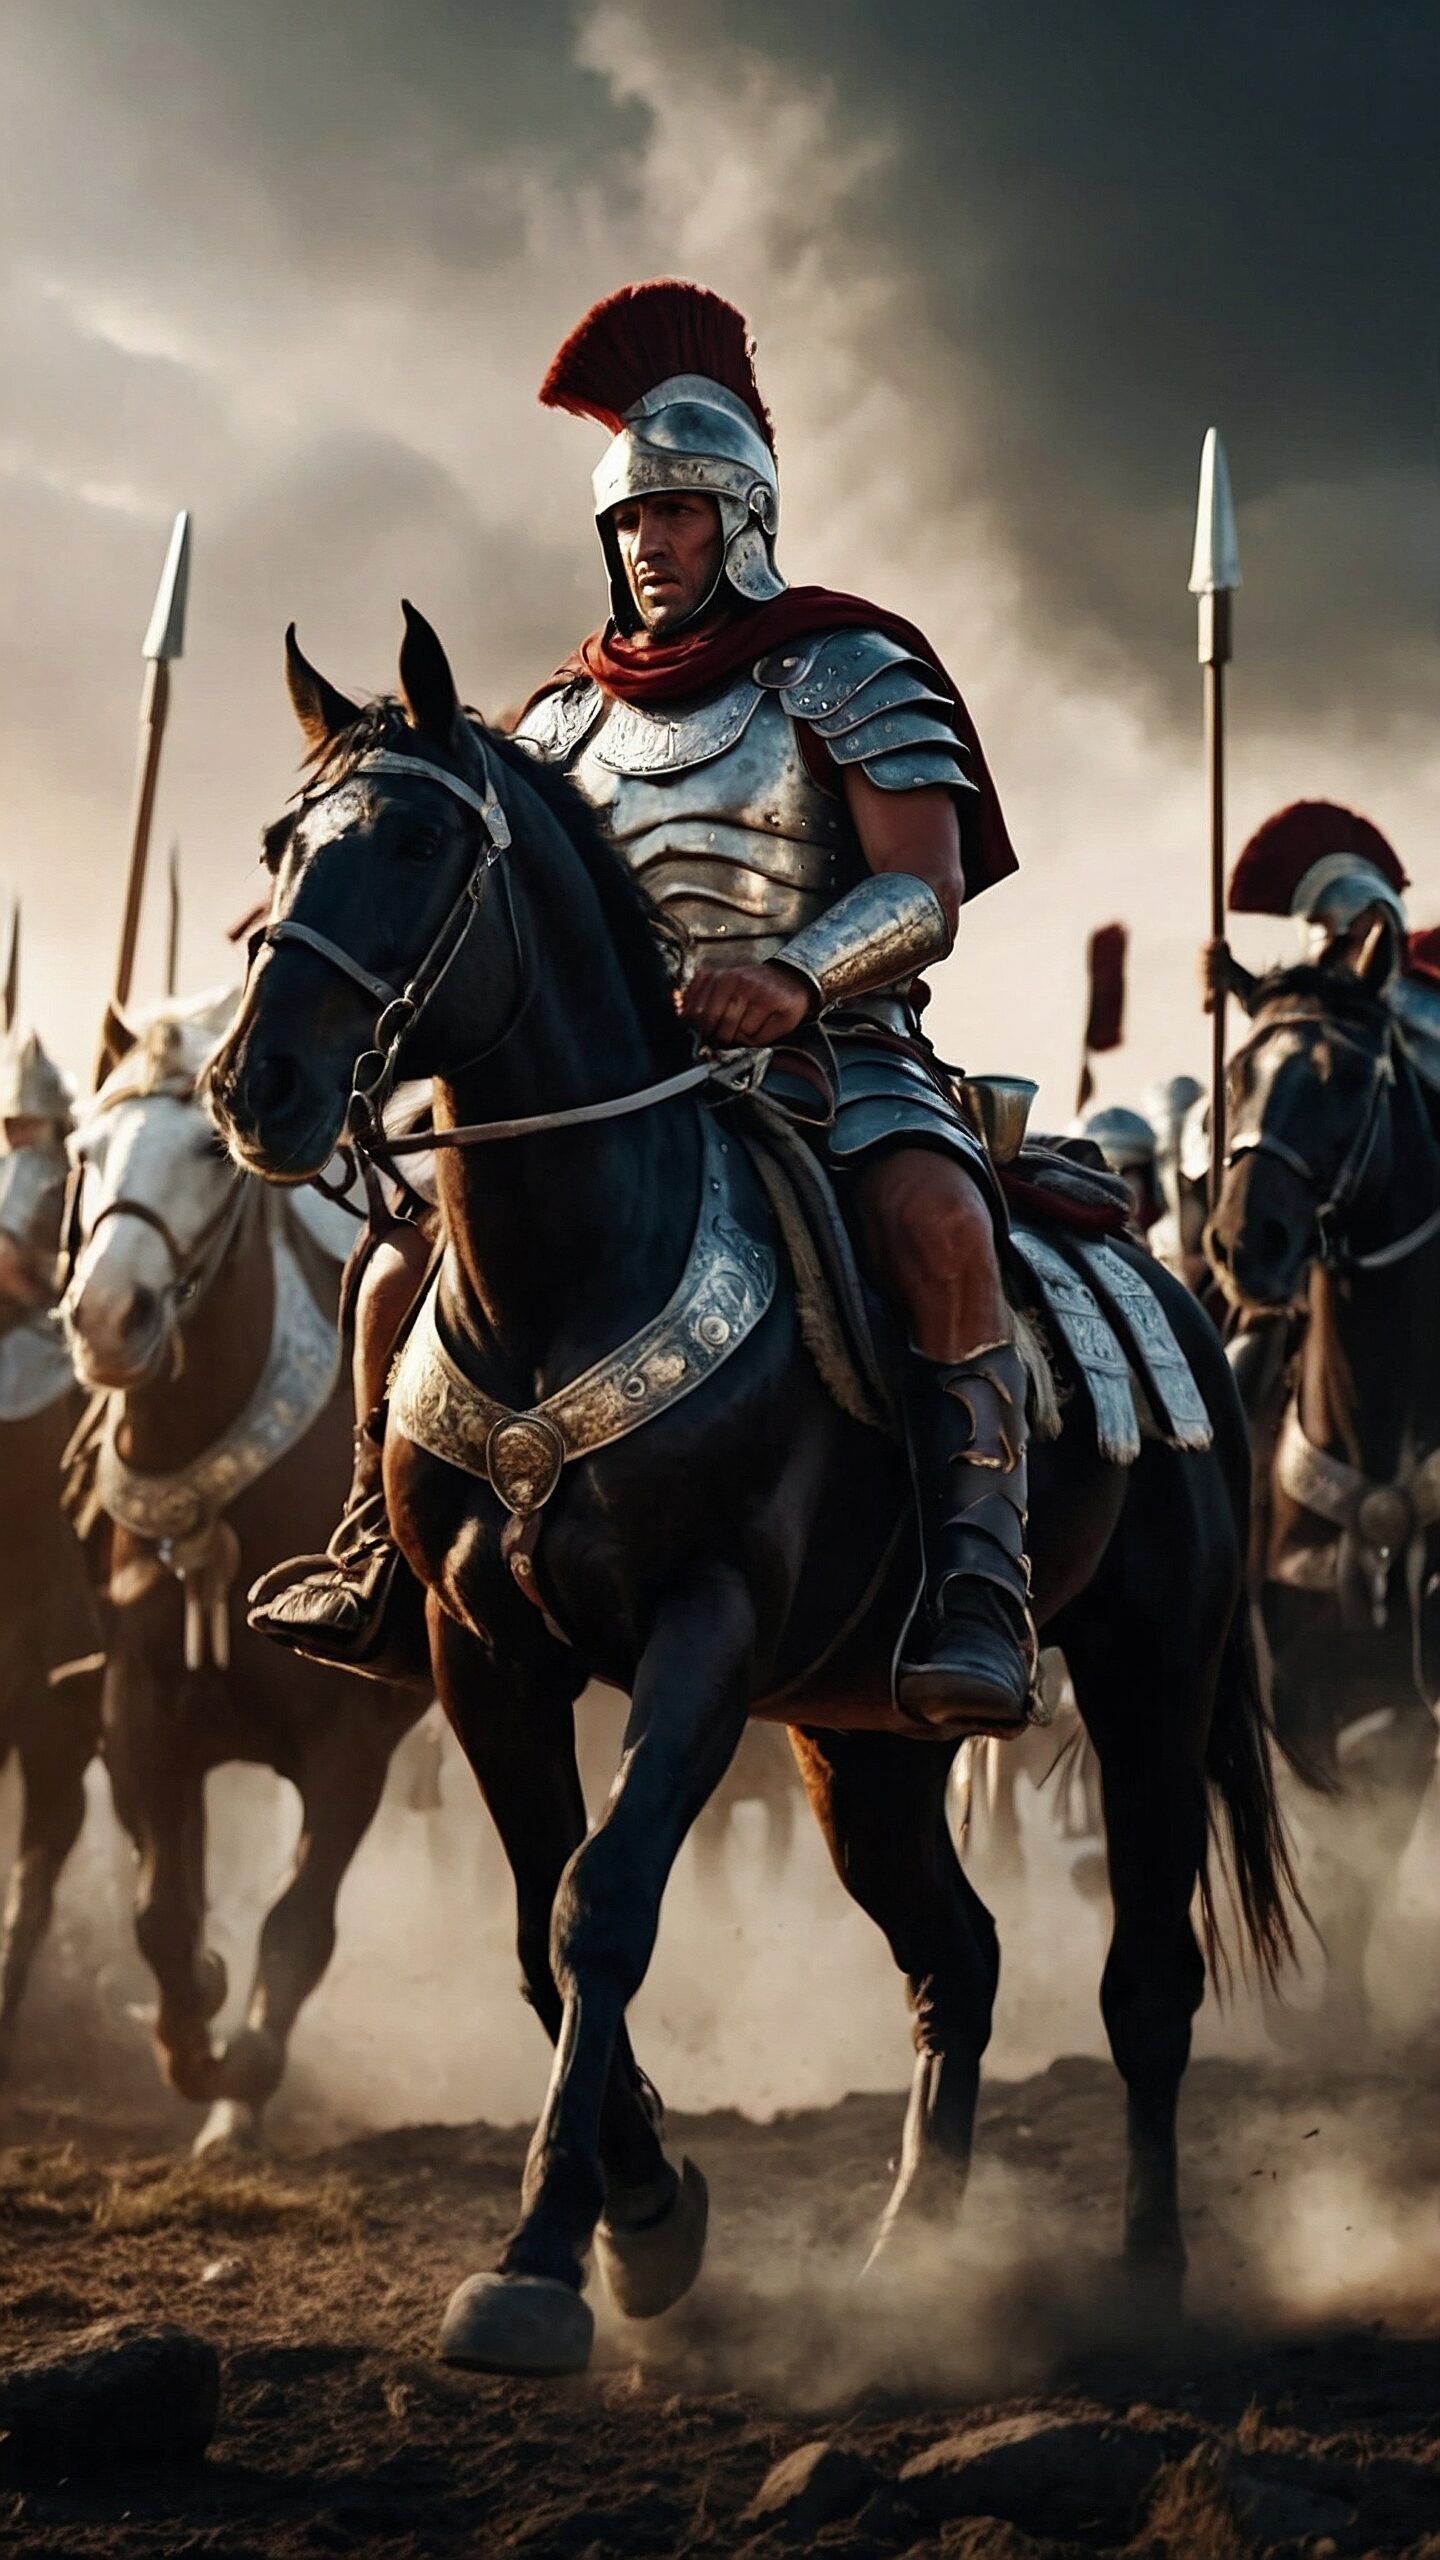 Default Romans many warriors marching on horseback realistic 4 5 939666d6 80b6 4fdf 9bd3 3e3447a8fd0b 0